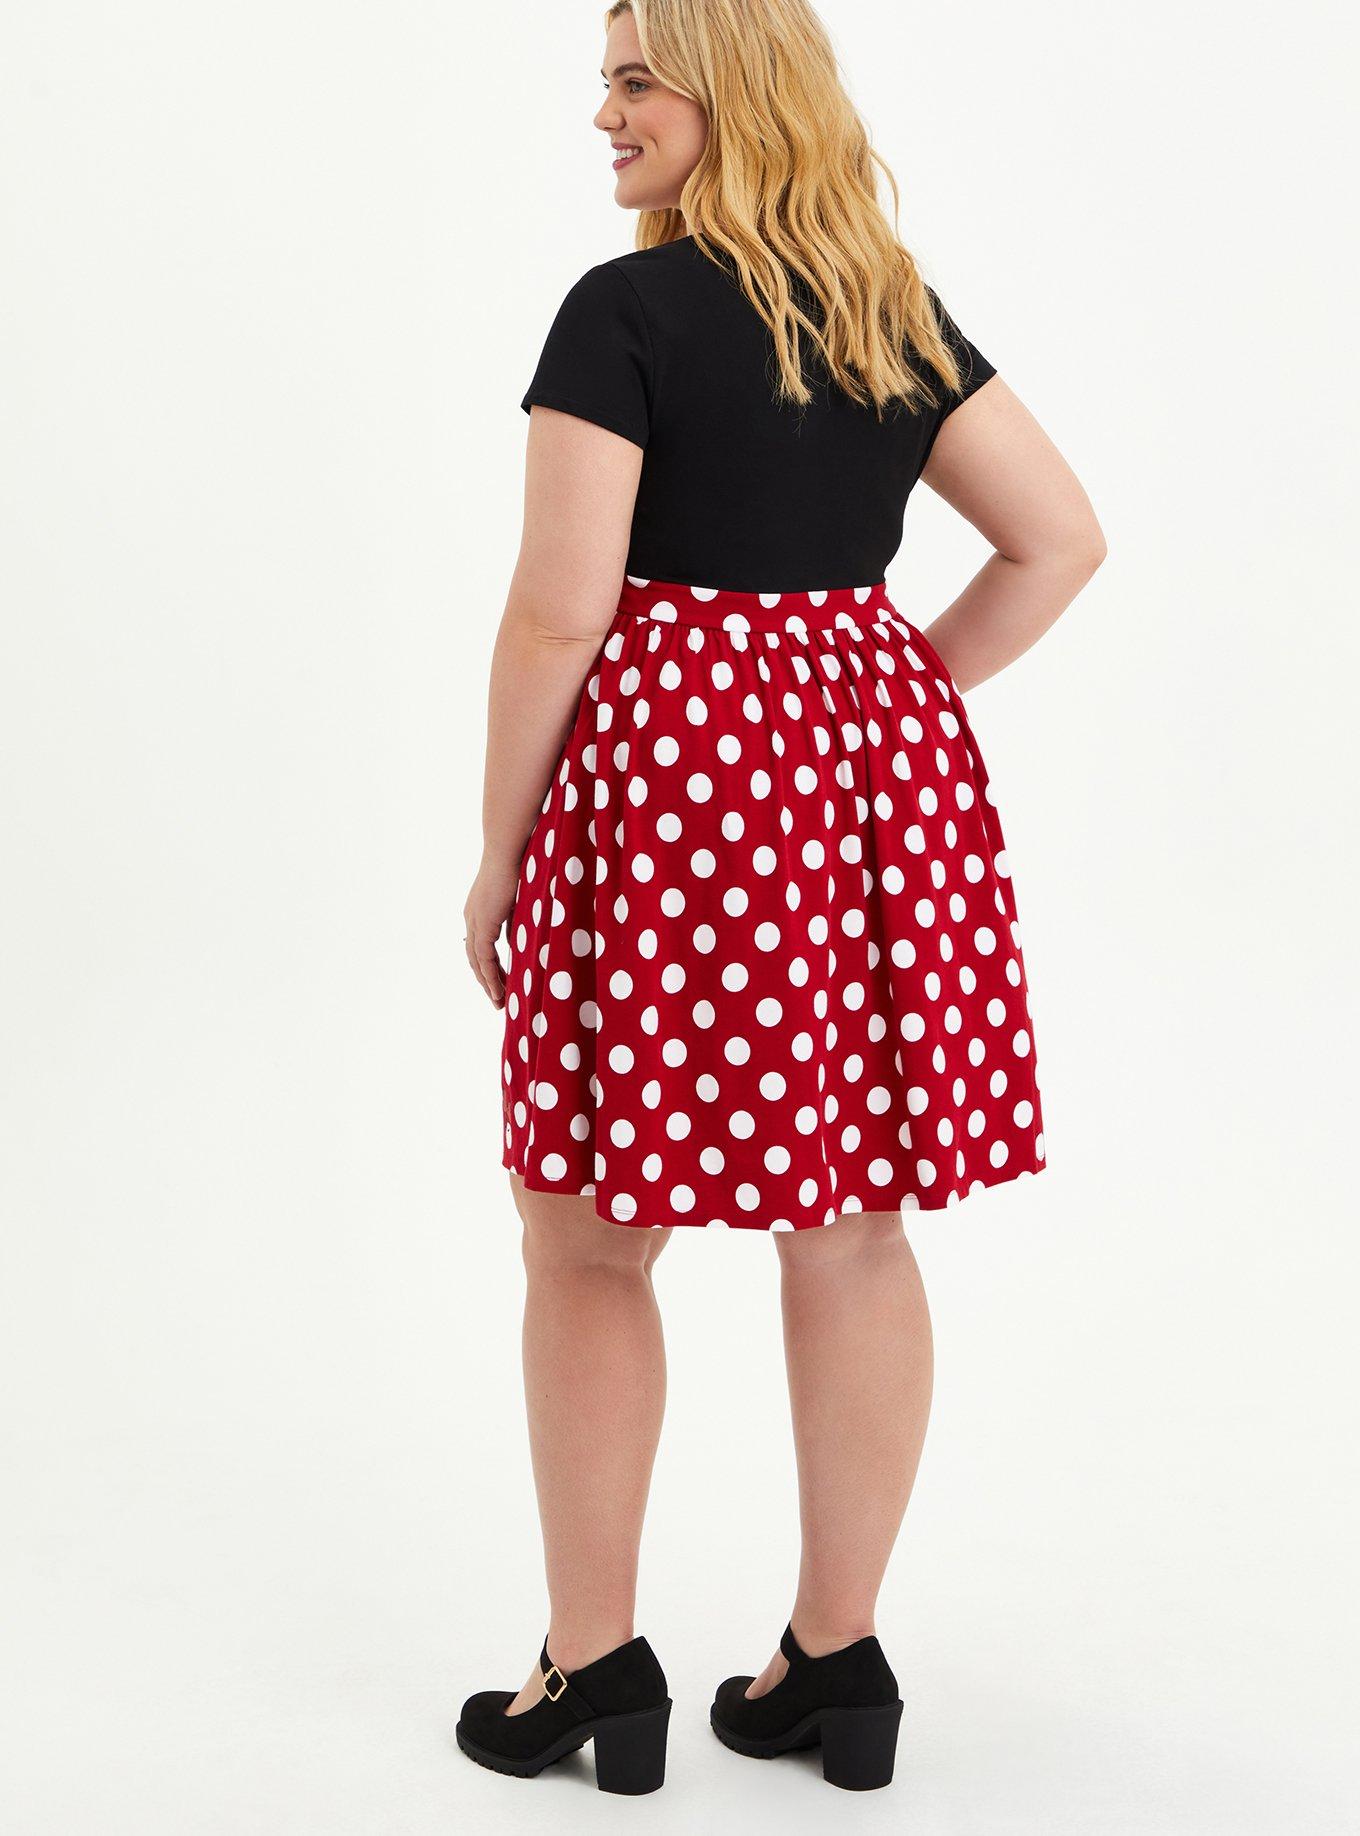 Plus Size - Brief Panty - Disney Minnie Mouse Polka Dot Red - Torrid